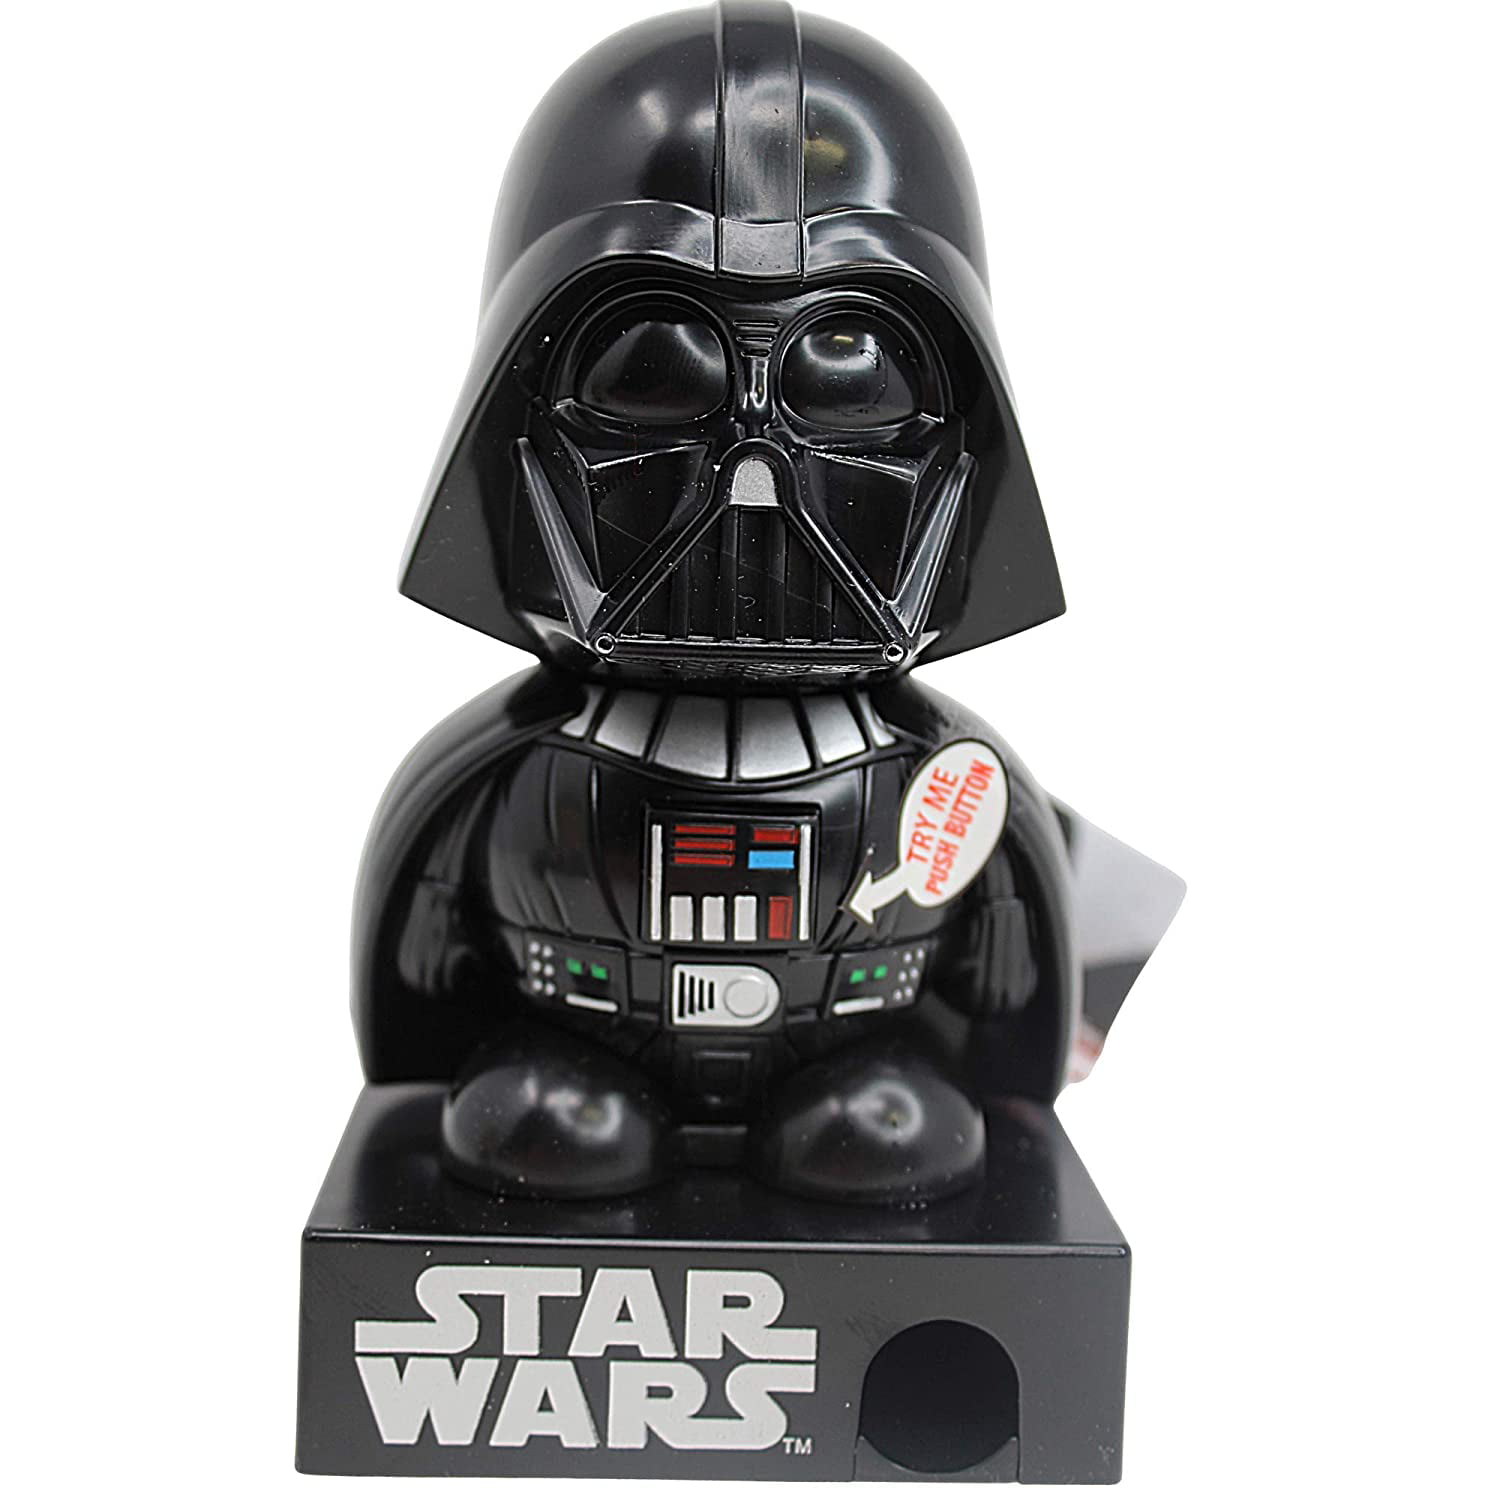 Disney Star Wars Darth Vader Candy Dispenser w Sound  5" Tall  New 